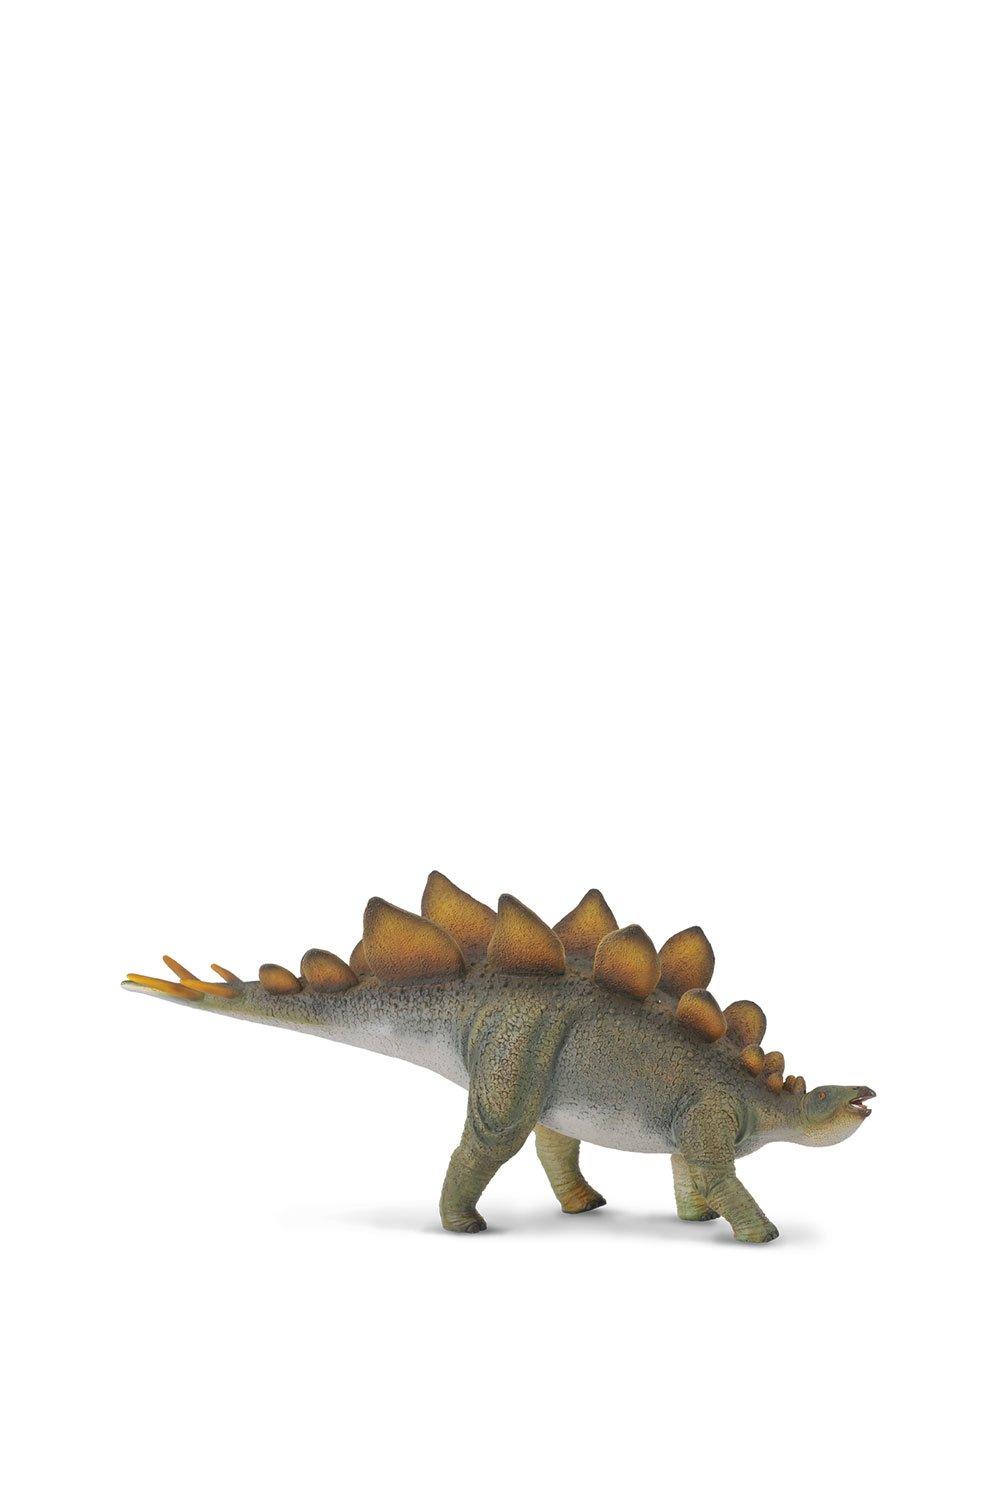 Stegosaurus Dinosaur Toy